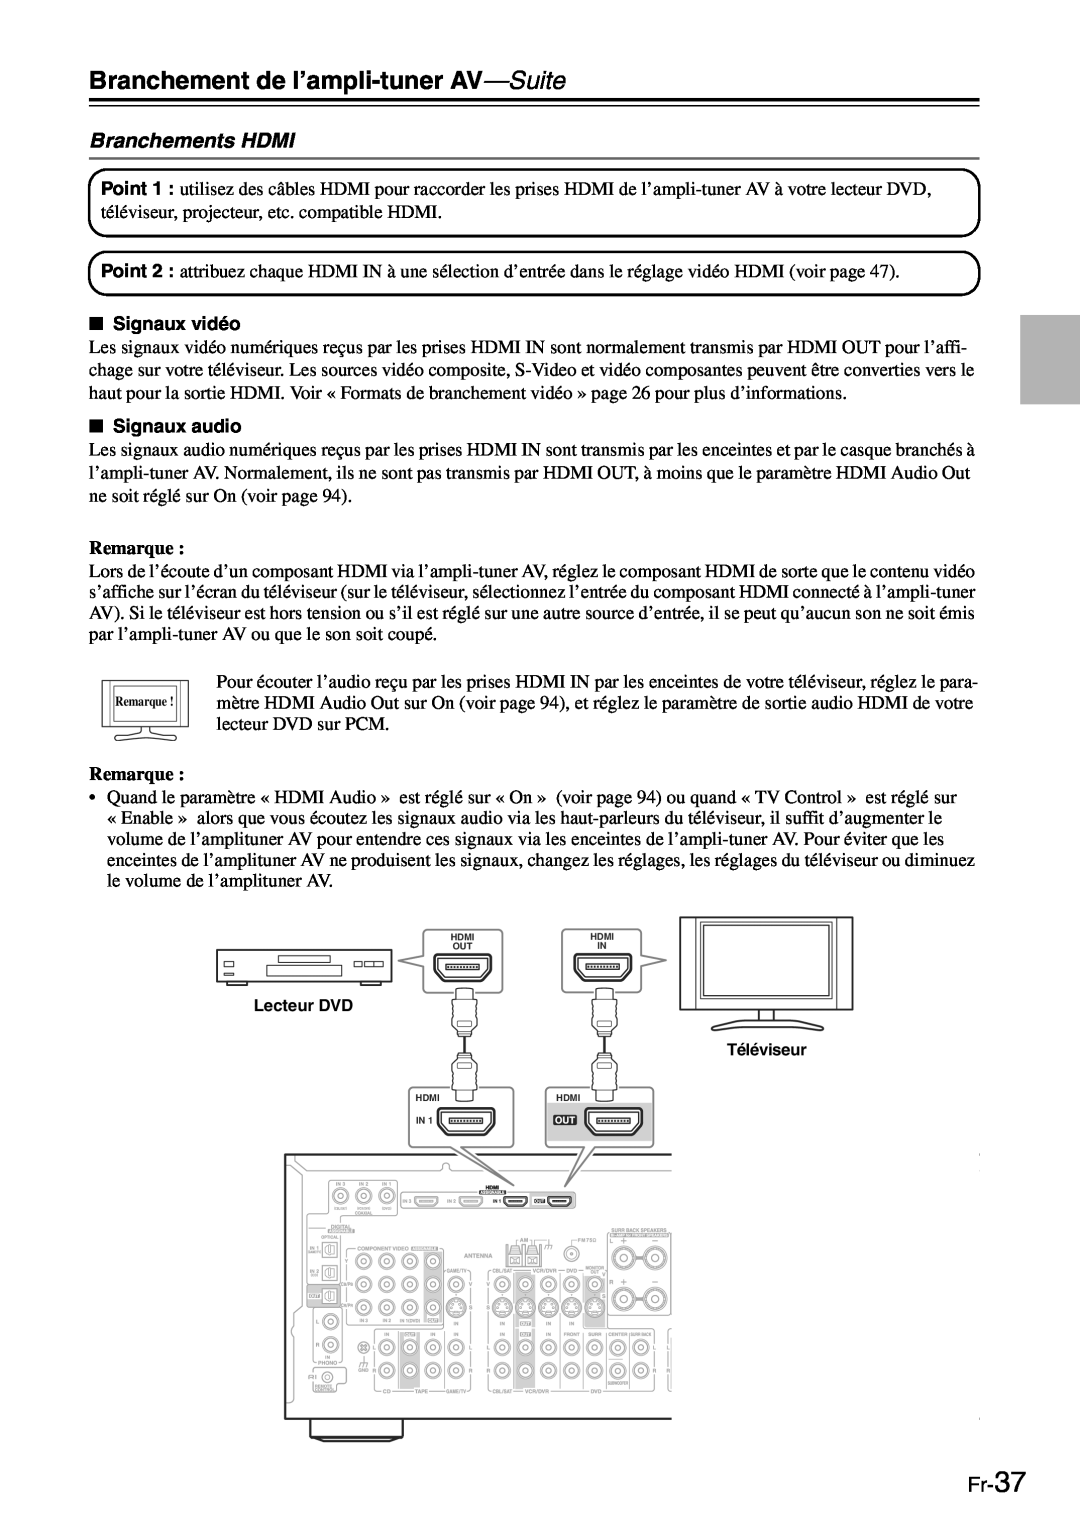 Onkyo TX-SR705 manual Branchements HDMI, Fr-37, Branchement de l’ampli-tuner AV—Suite, Remarque 